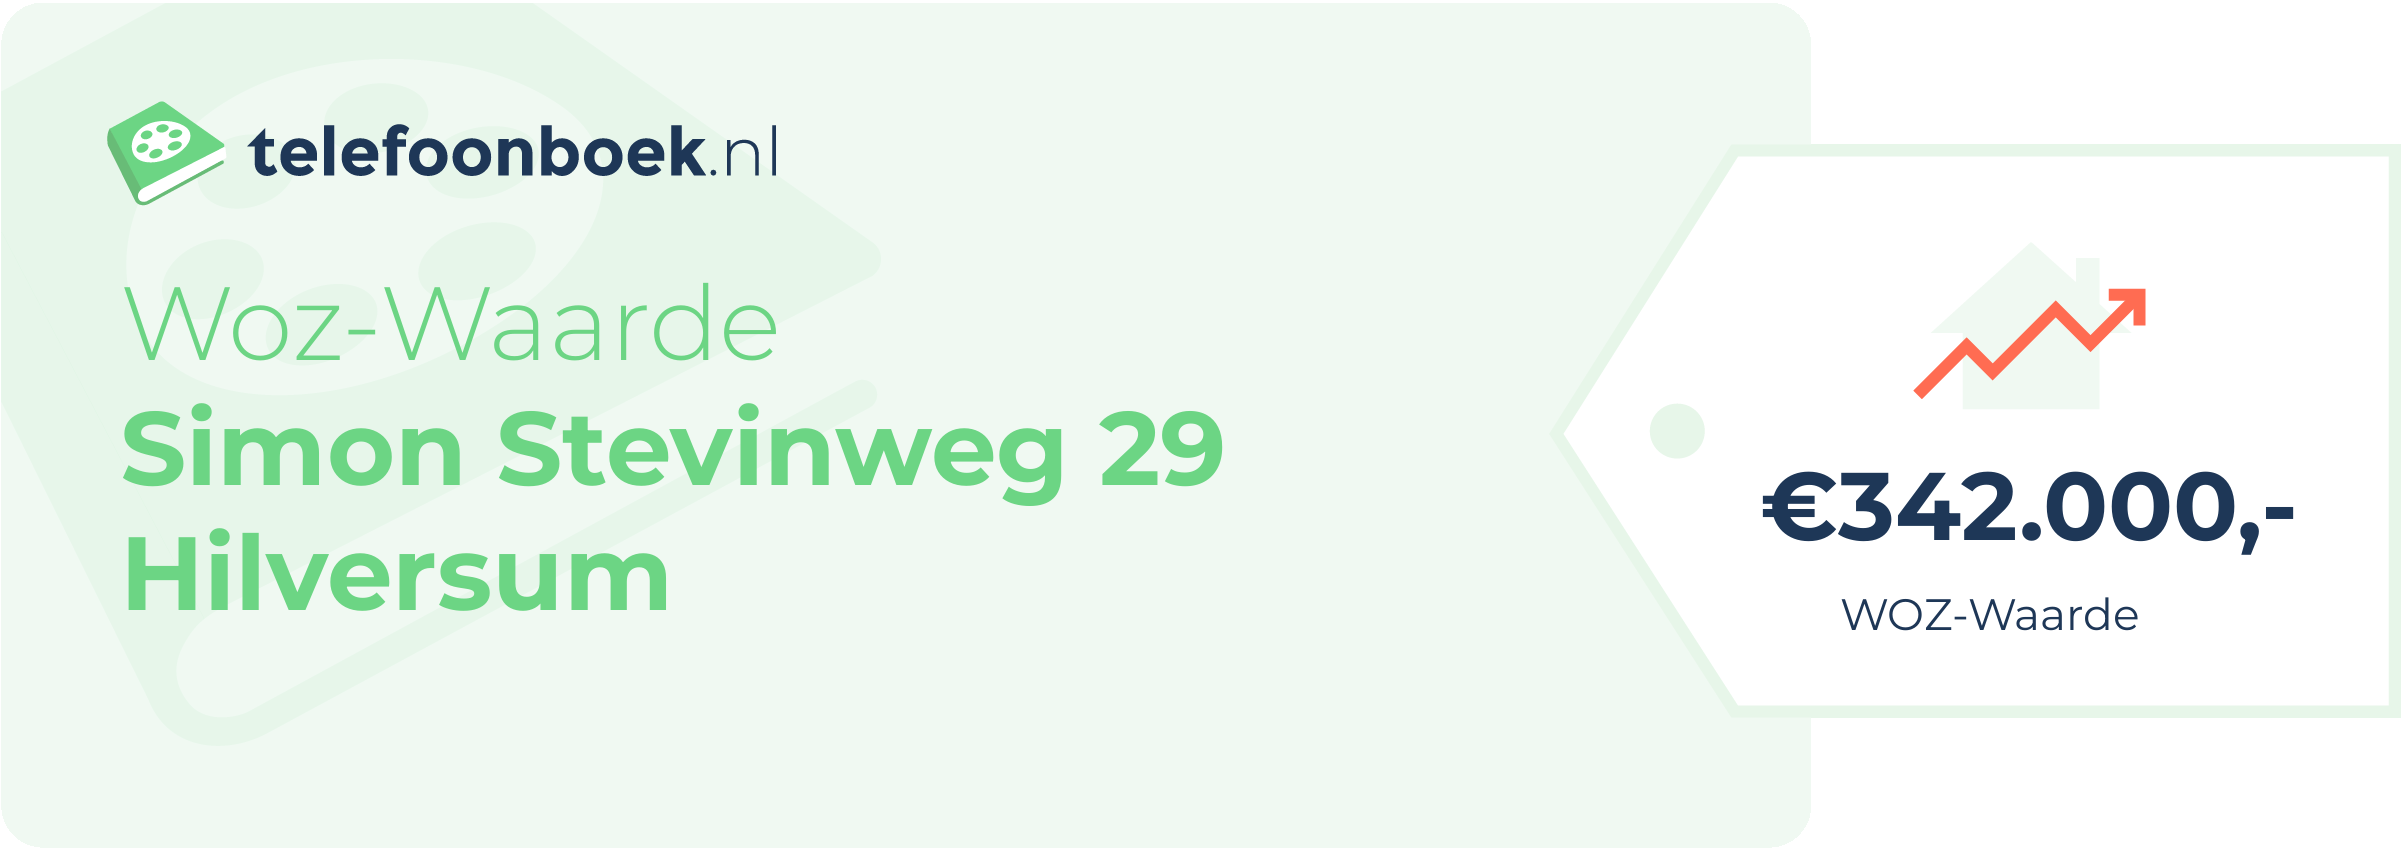 WOZ-waarde Simon Stevinweg 29 Hilversum